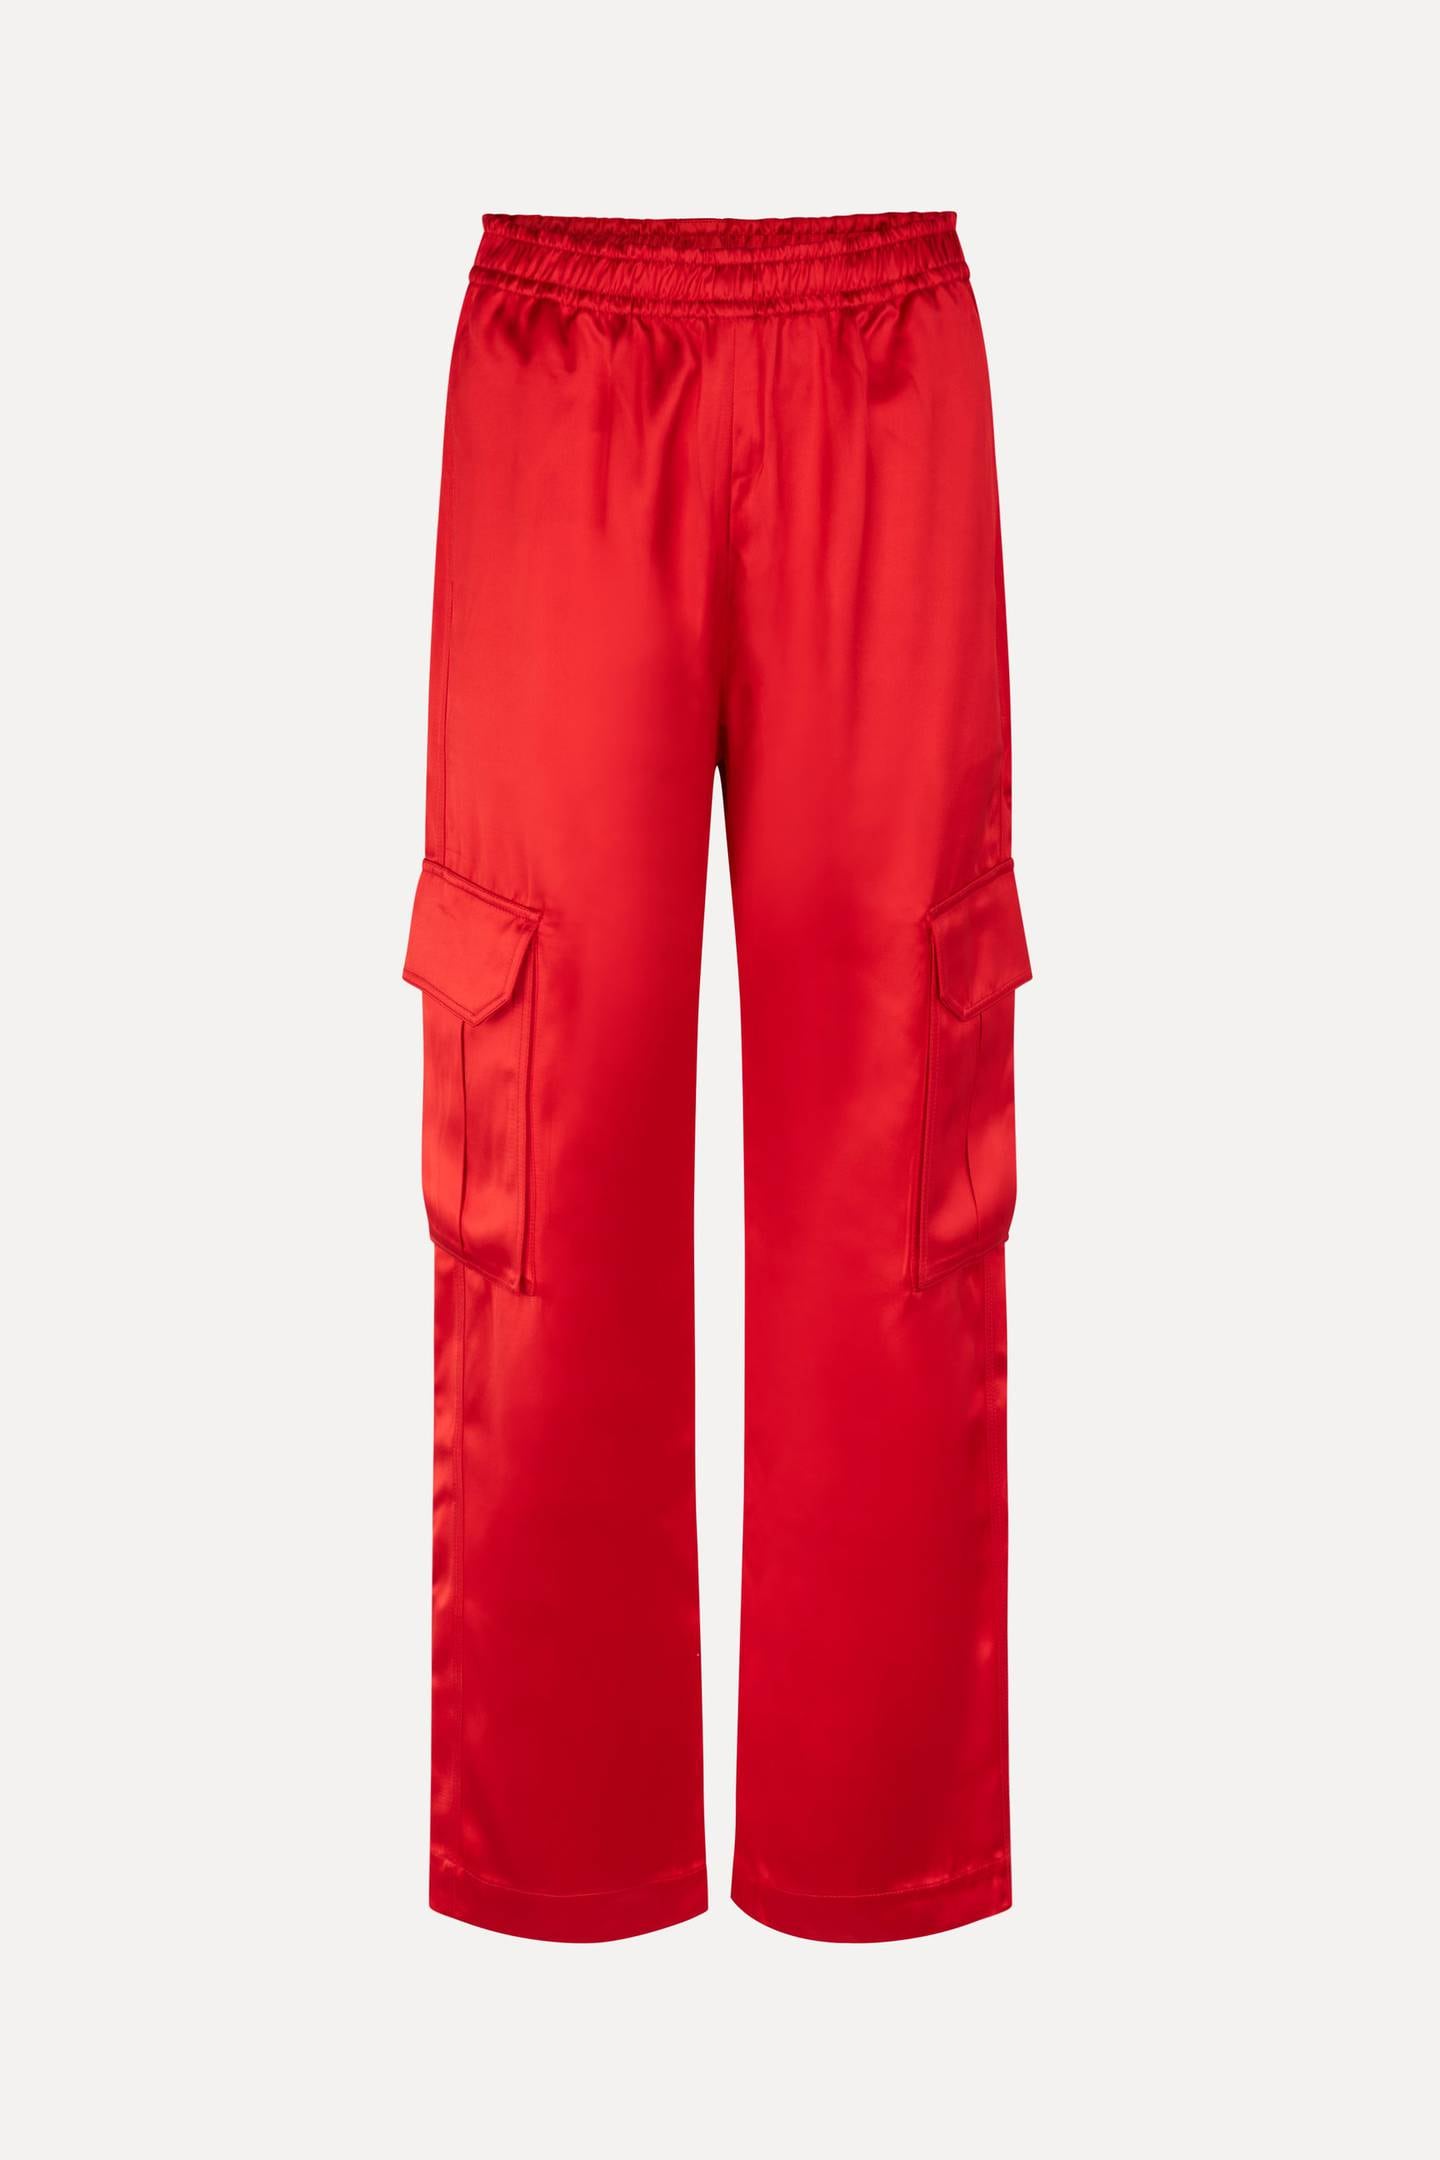 Silk cargo trousers, €295, Stine Goya, Arnotts